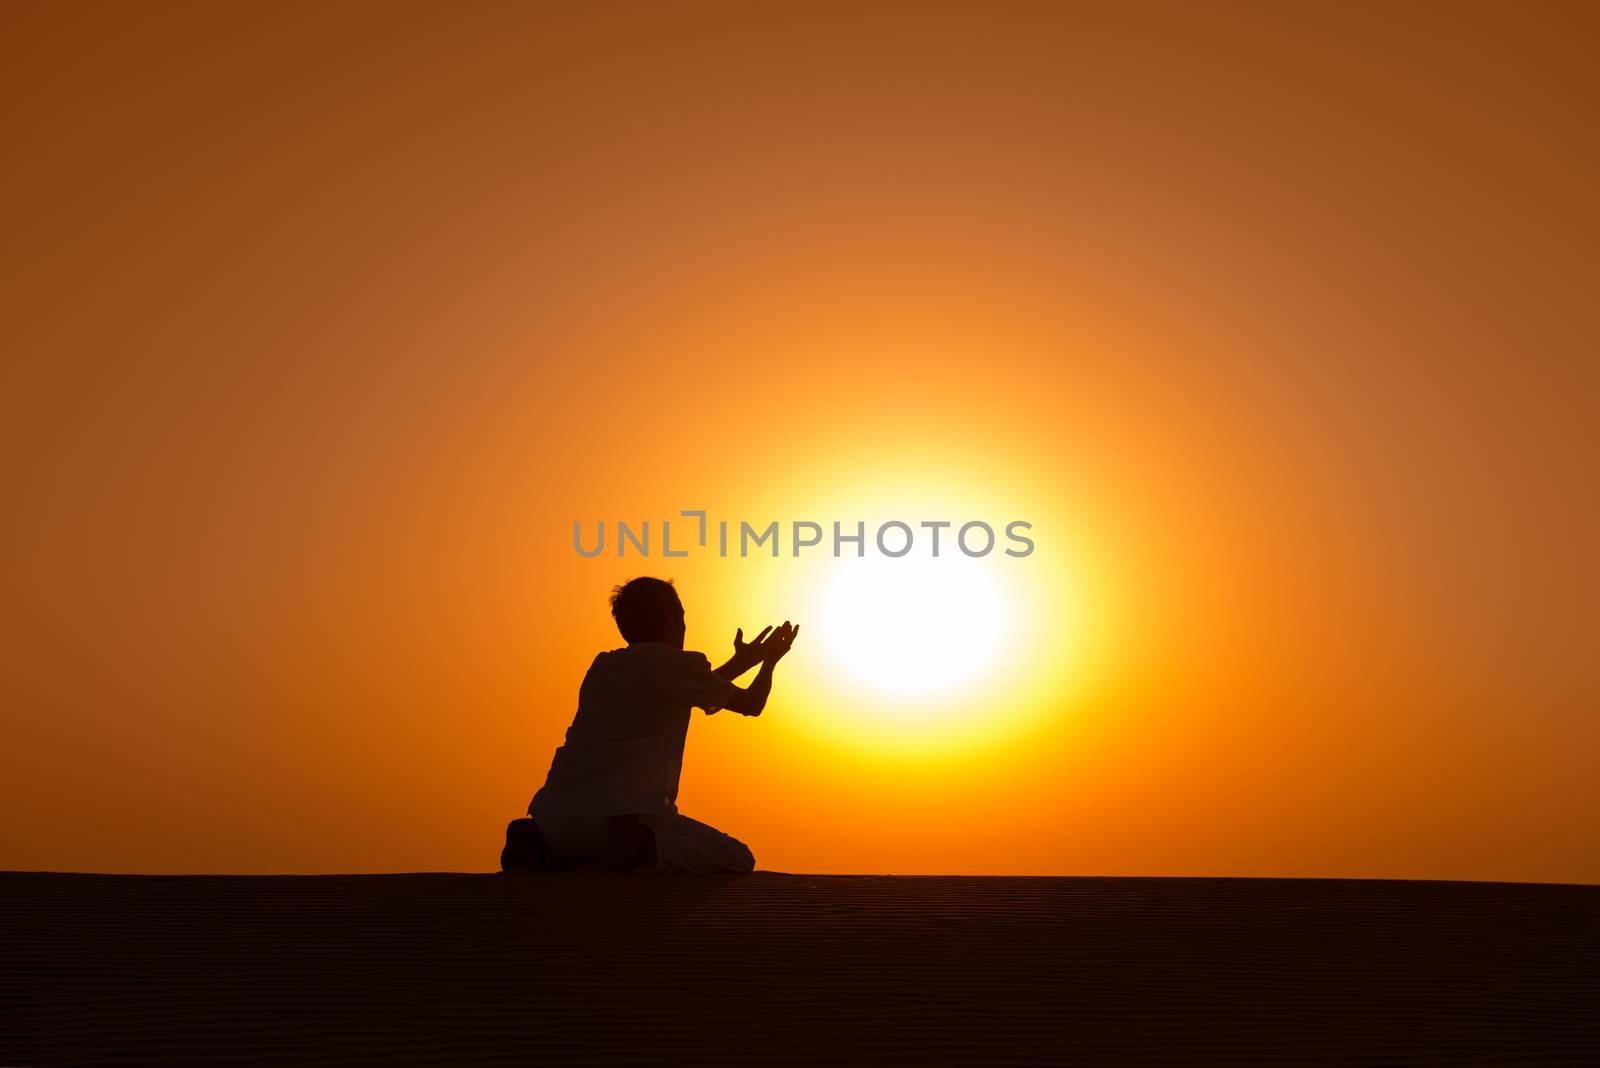 Man silhouette kneel and pray for help by iryna_rasko